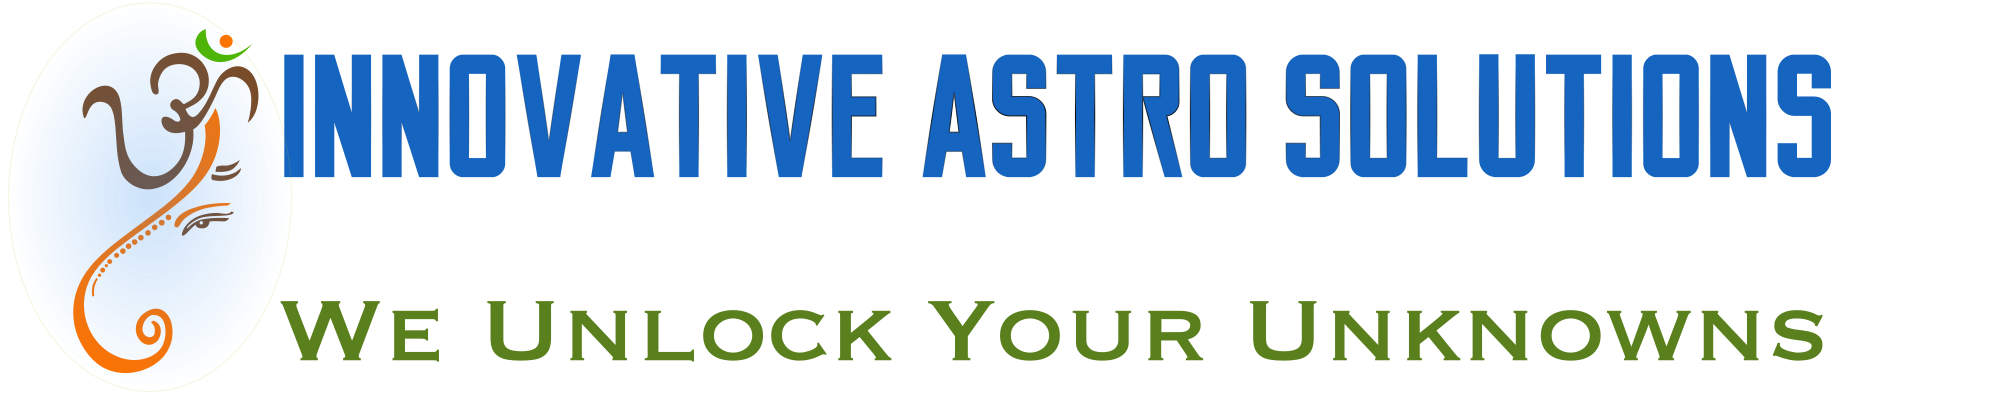 Innovative Astro Solutions